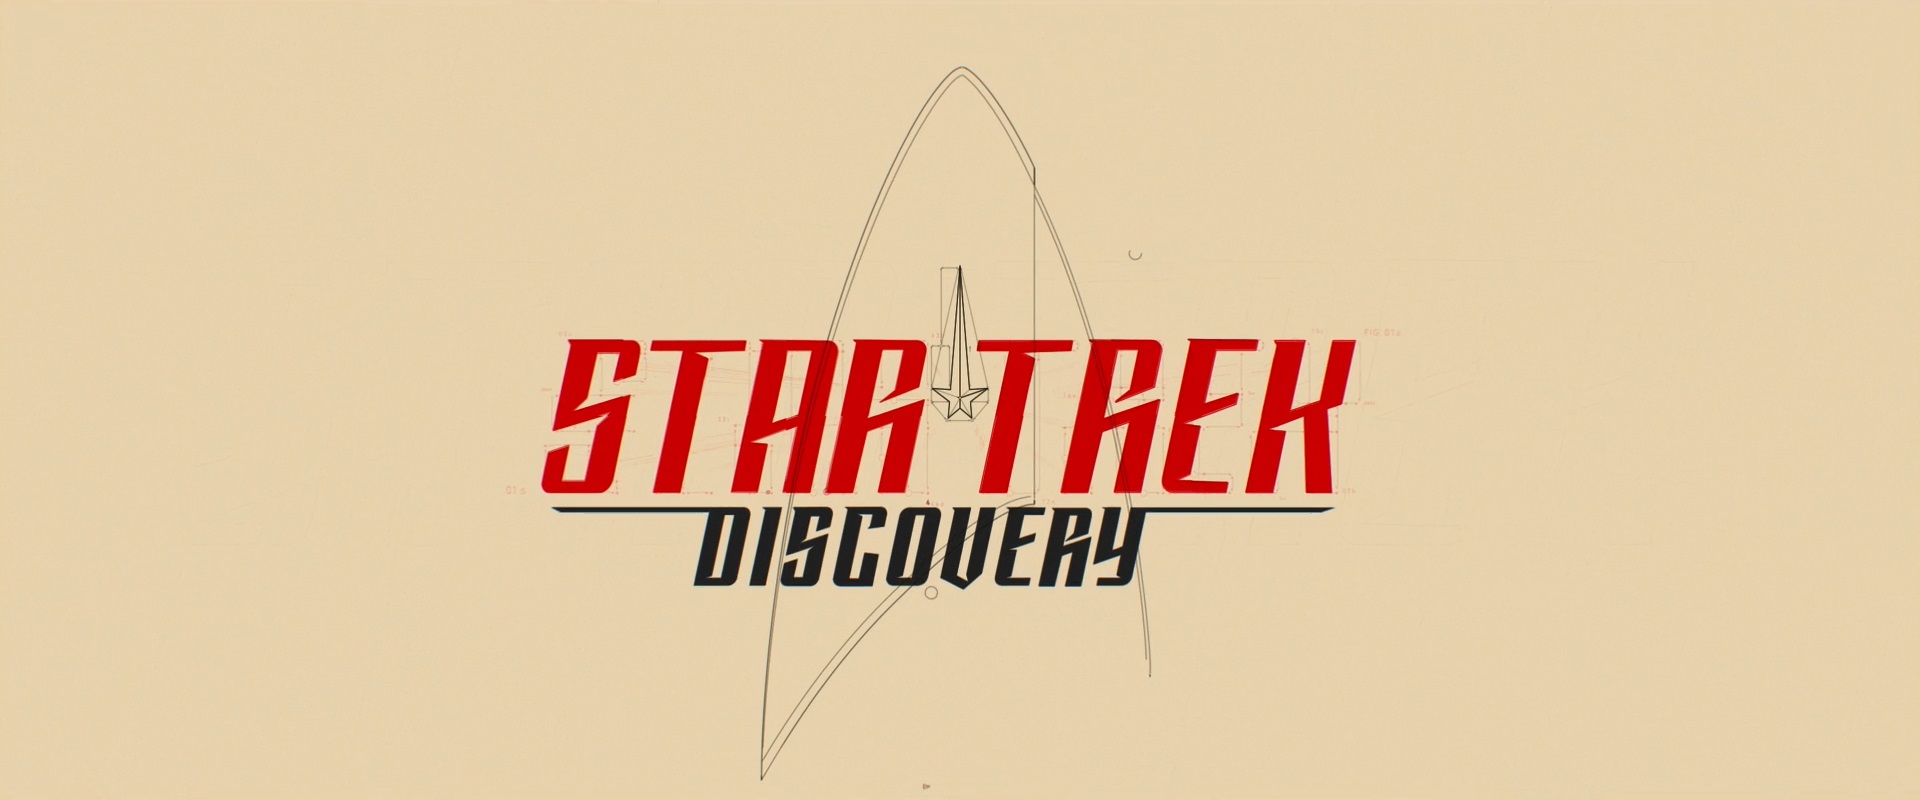 Star Trek Discovery - Title (CBS)